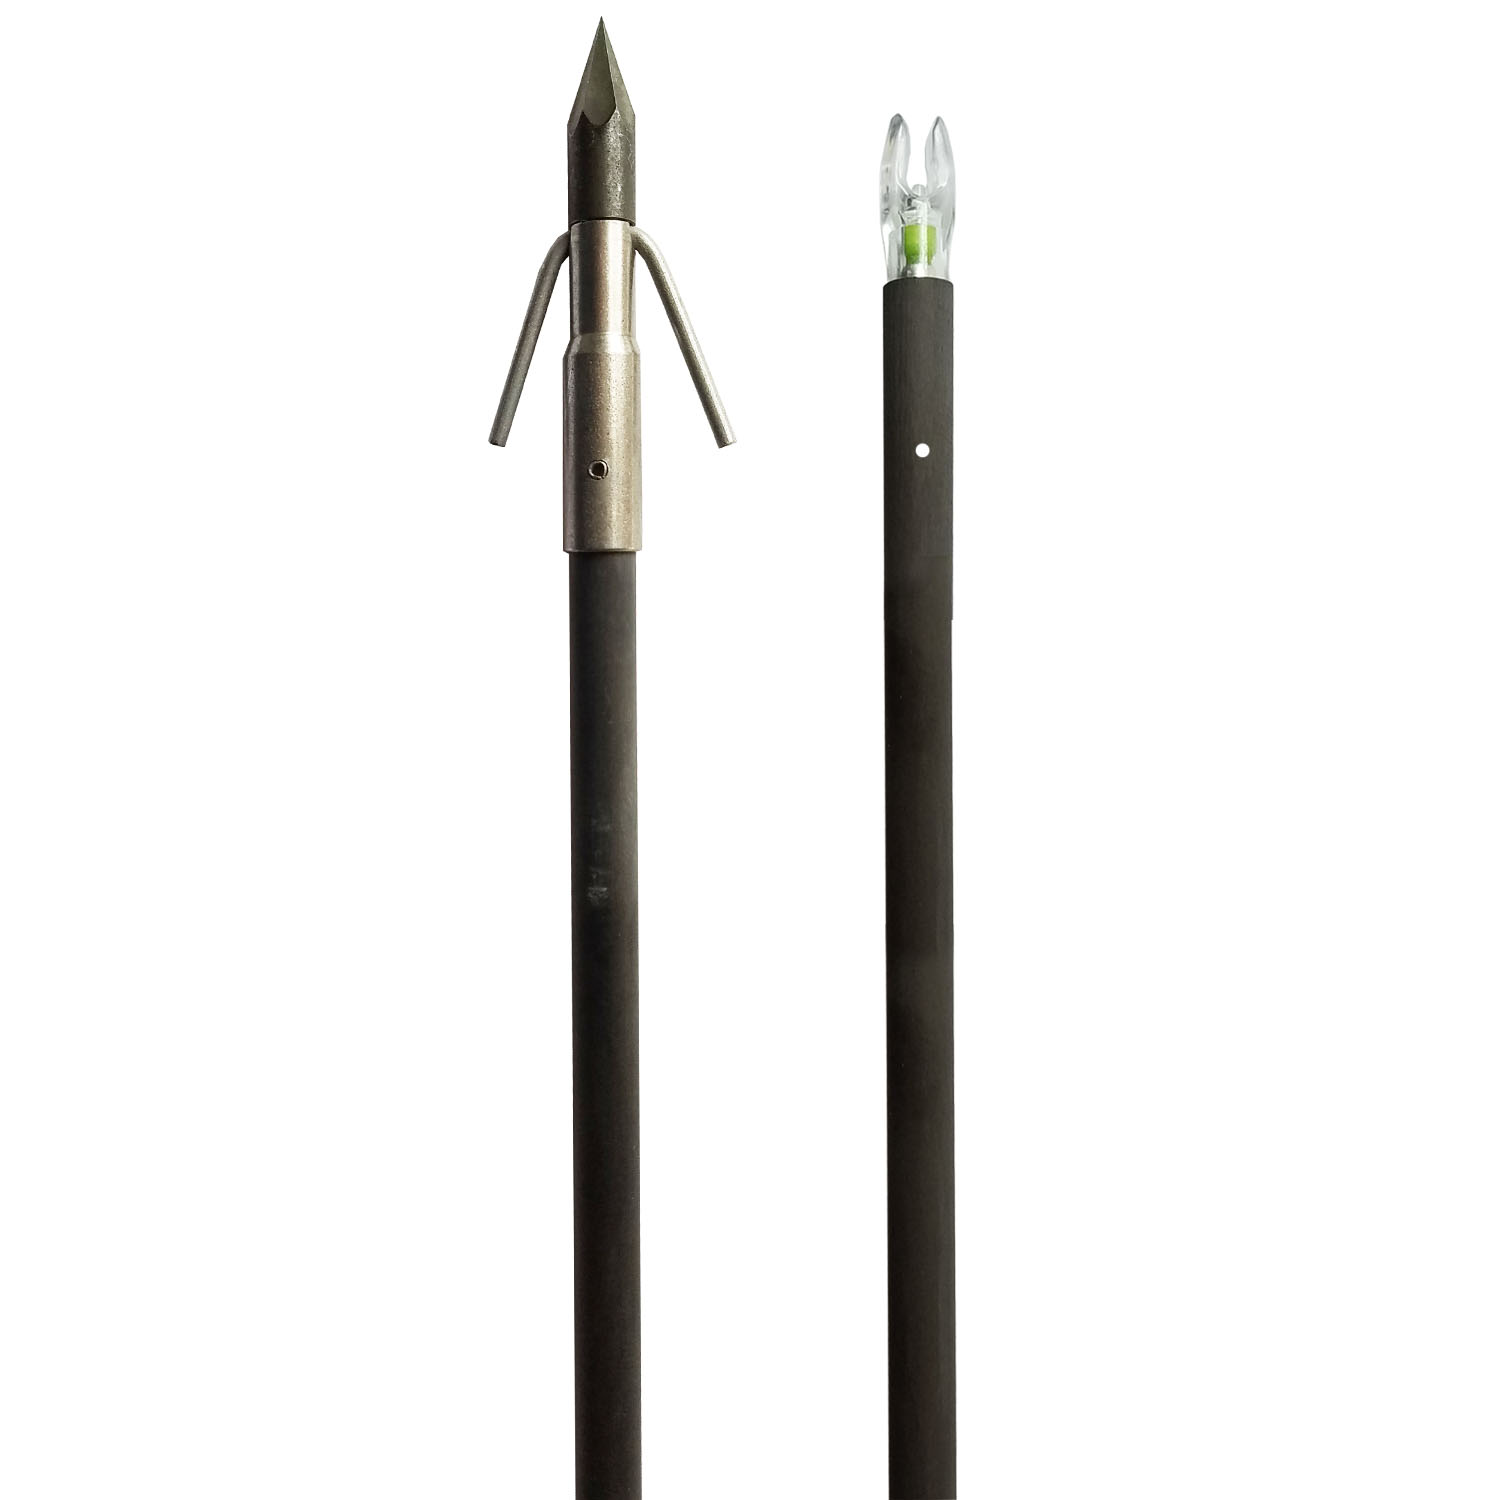 Muzzy Bowfishing Arrow Lighted Carbon Composite Arrow with Carp Point Green  X Nock 1320-C - Farmstead Outdoors